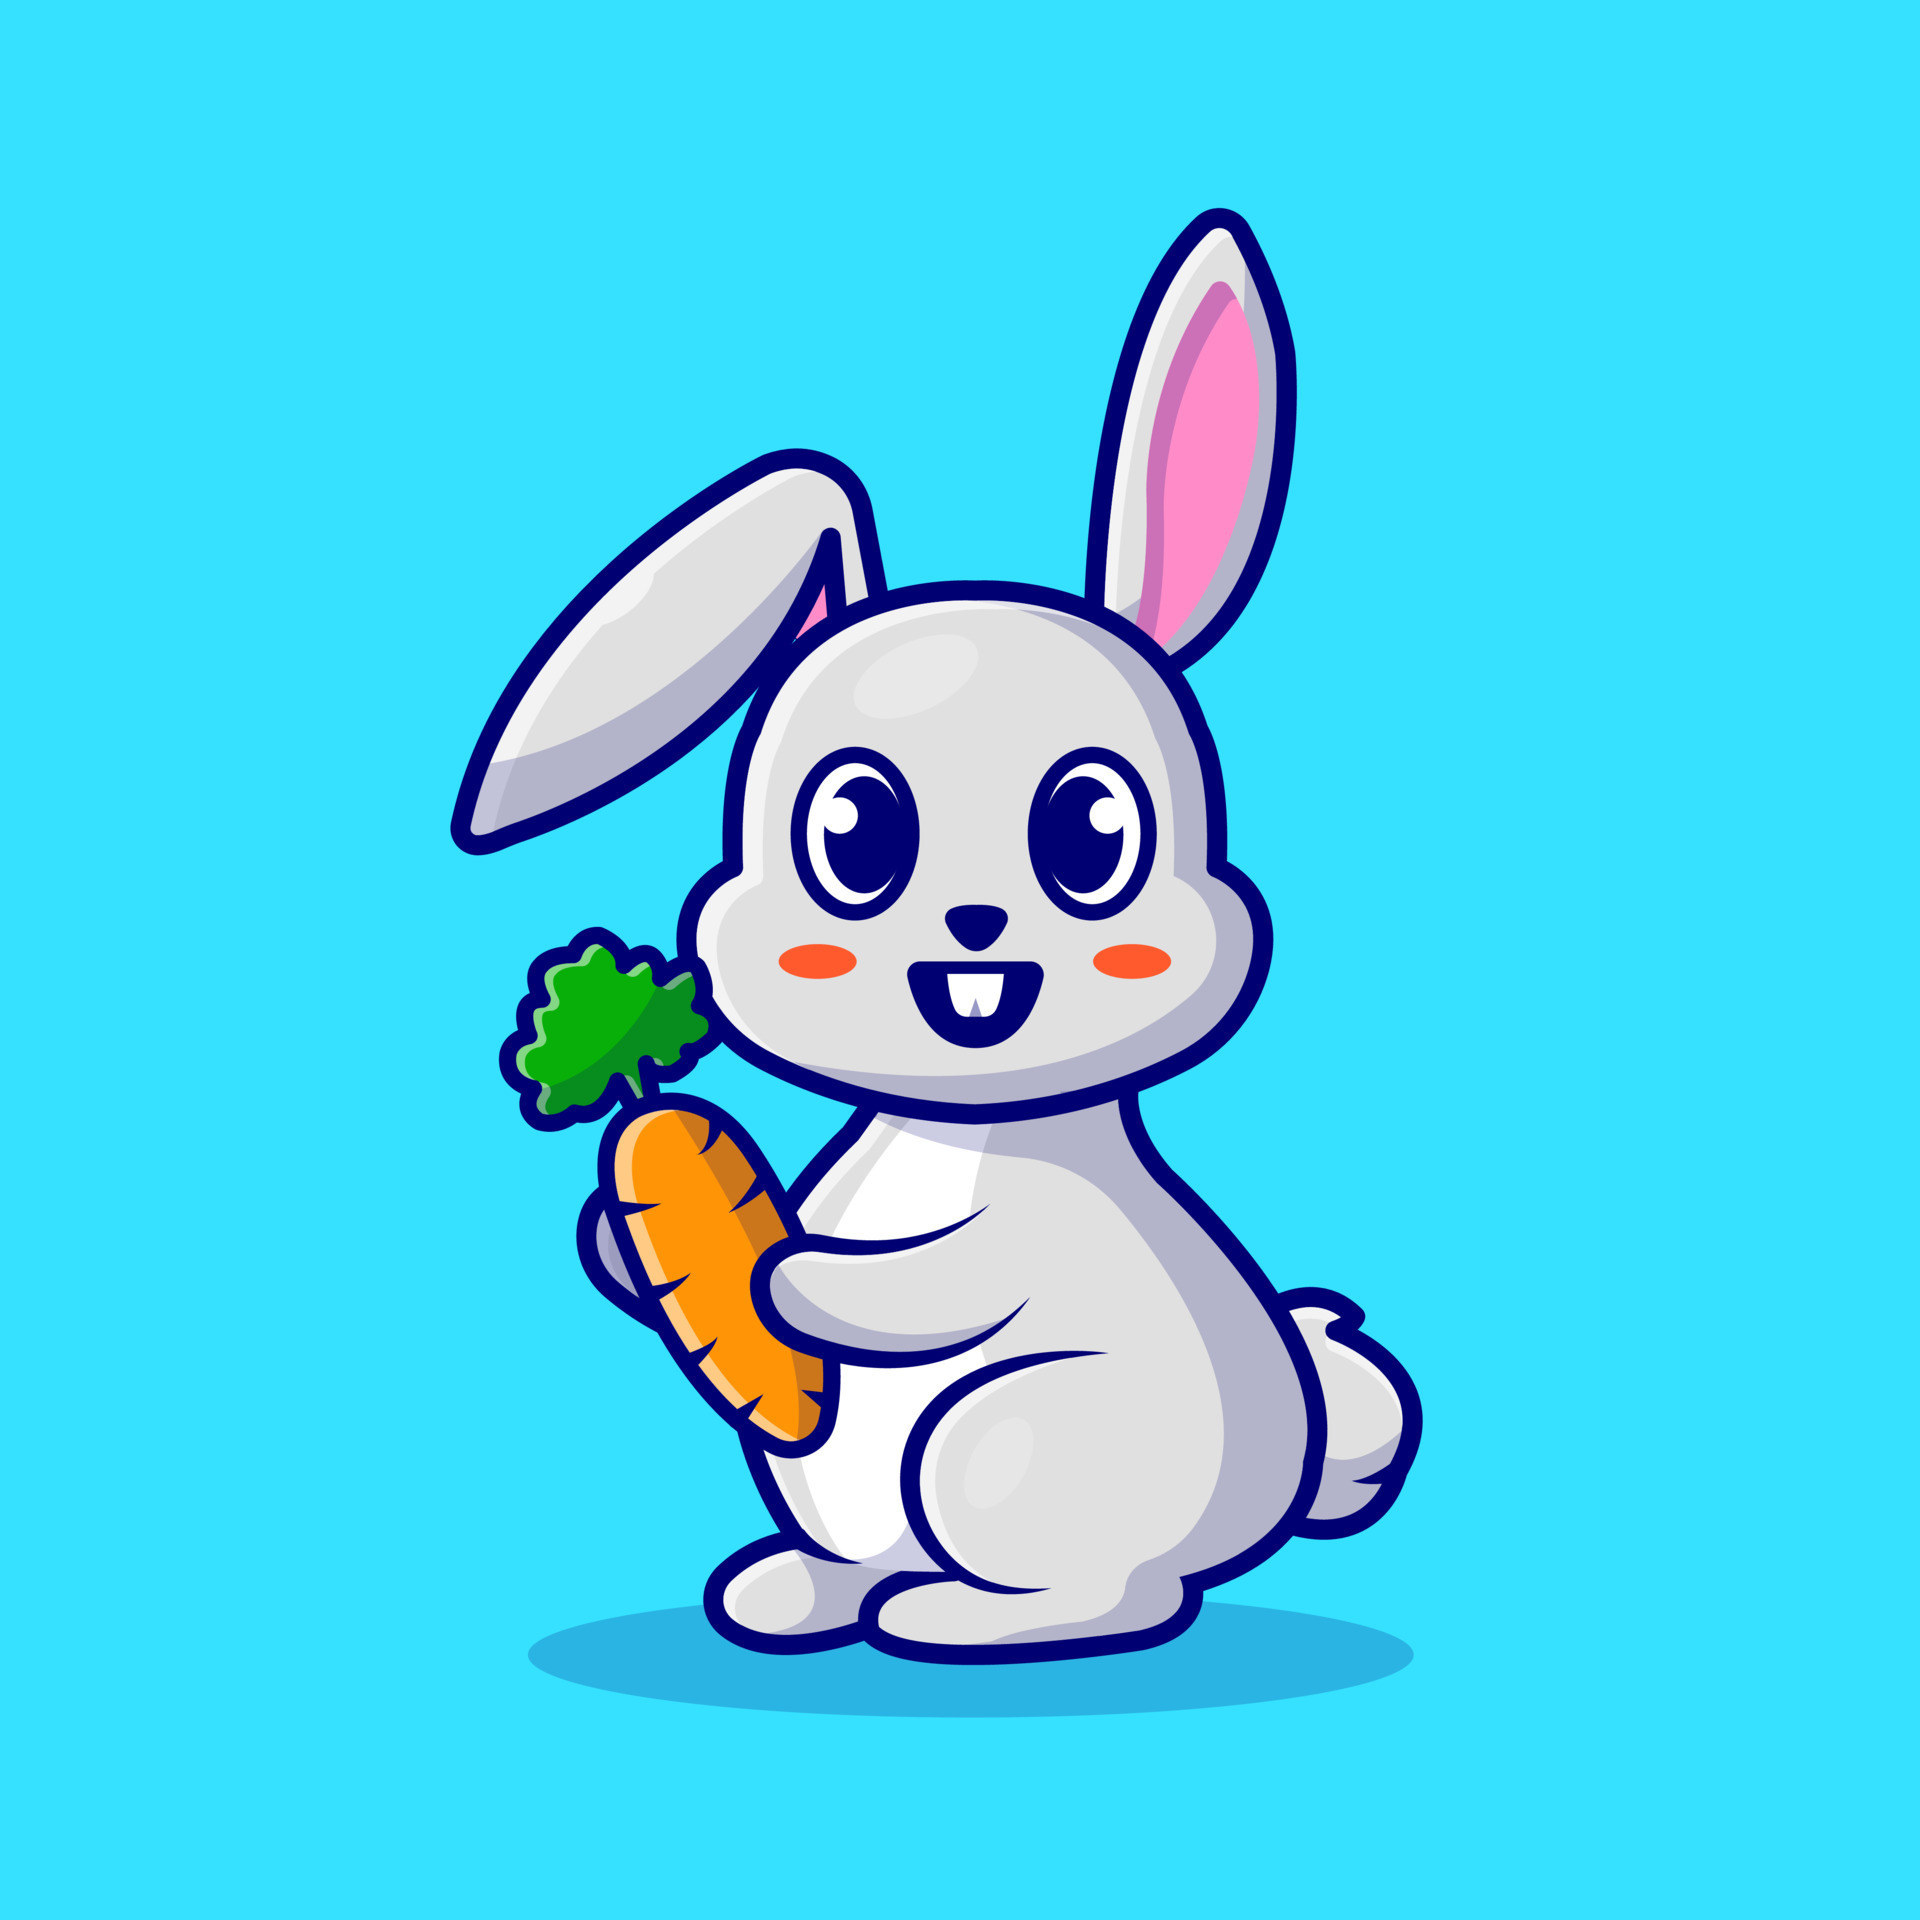 Cute Rabbit With Carrot Cartoon Vector Icon Illustration. Animal Nature ...